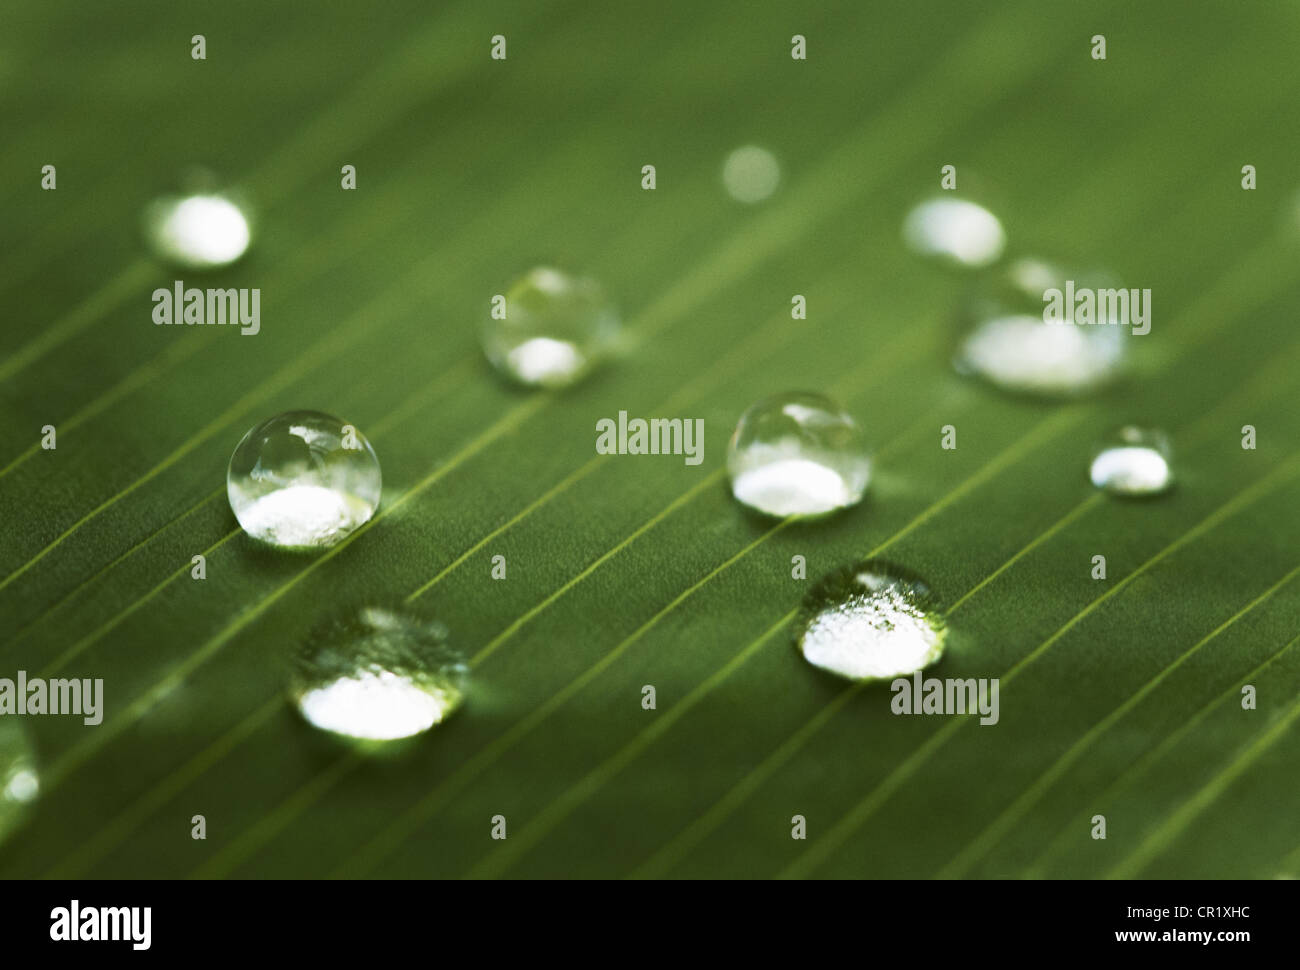 Close up of water droplets on leaf Banque D'Images